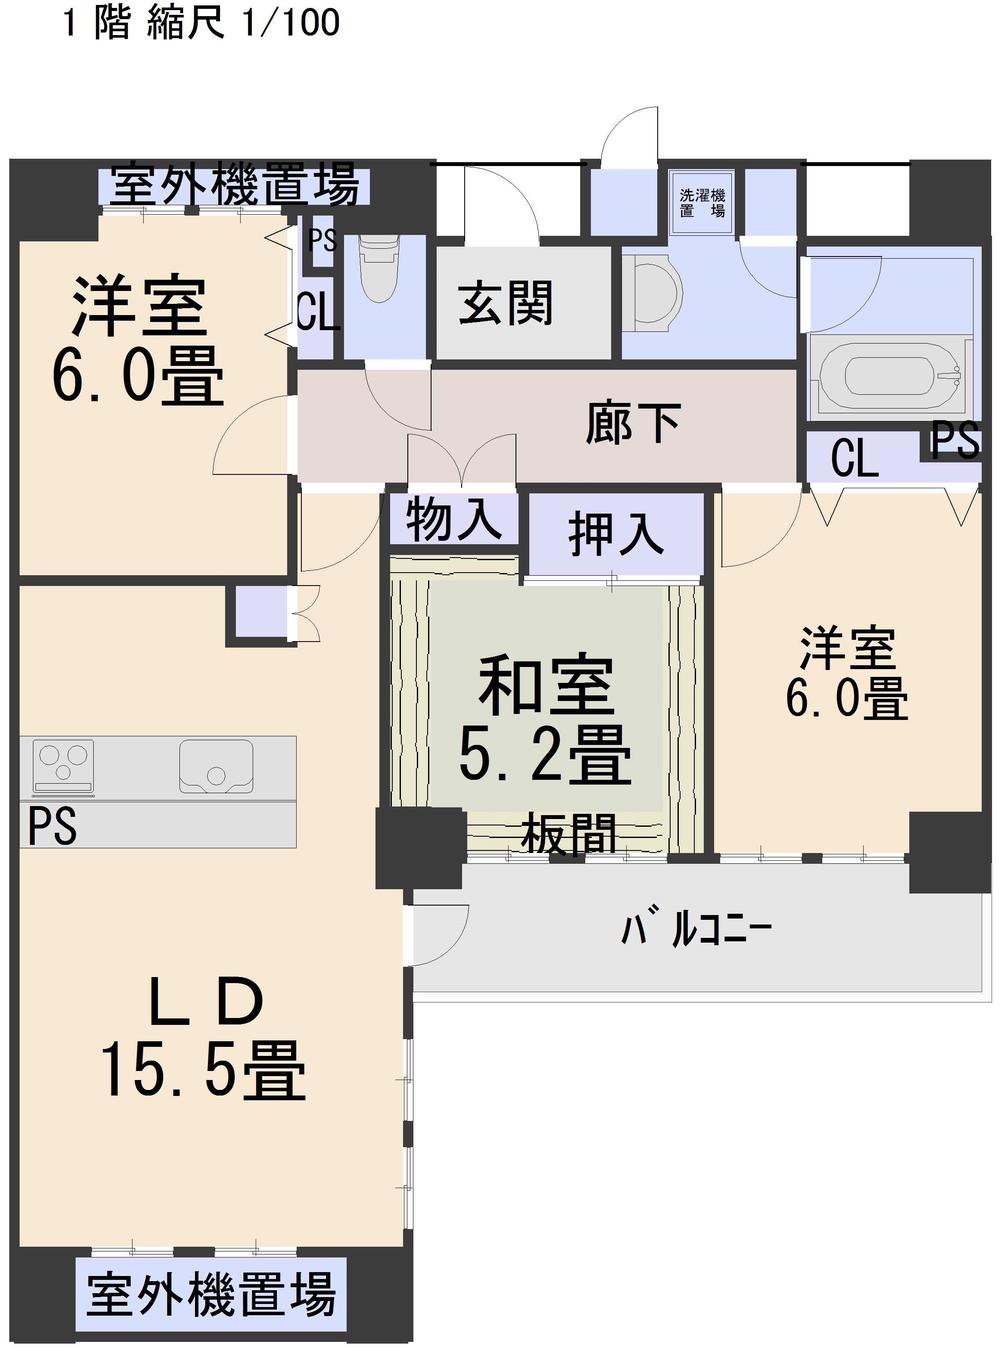 Floor plan. 3LDK, Price 23.5 million yen, Occupied area 74.42 sq m , Balcony area 8.6 sq m